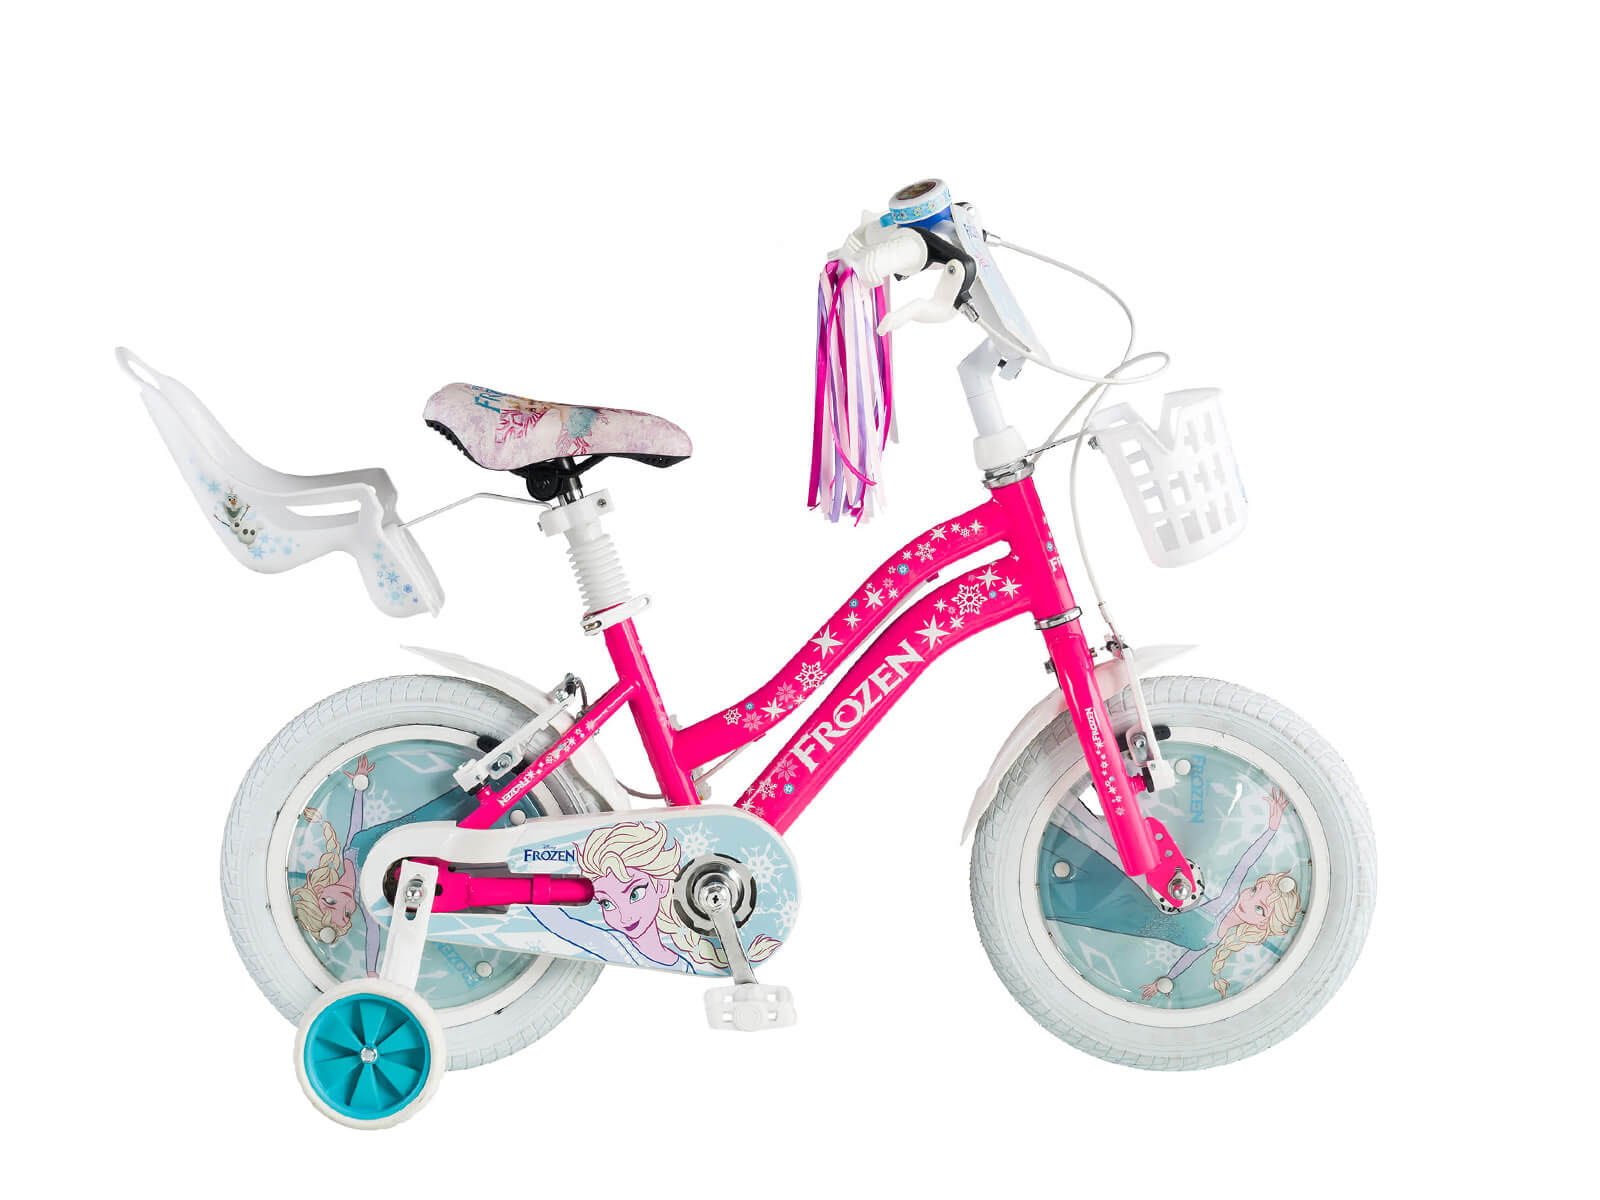 Kron Frozen 12 Jant Kız Çocuk Bisikleti